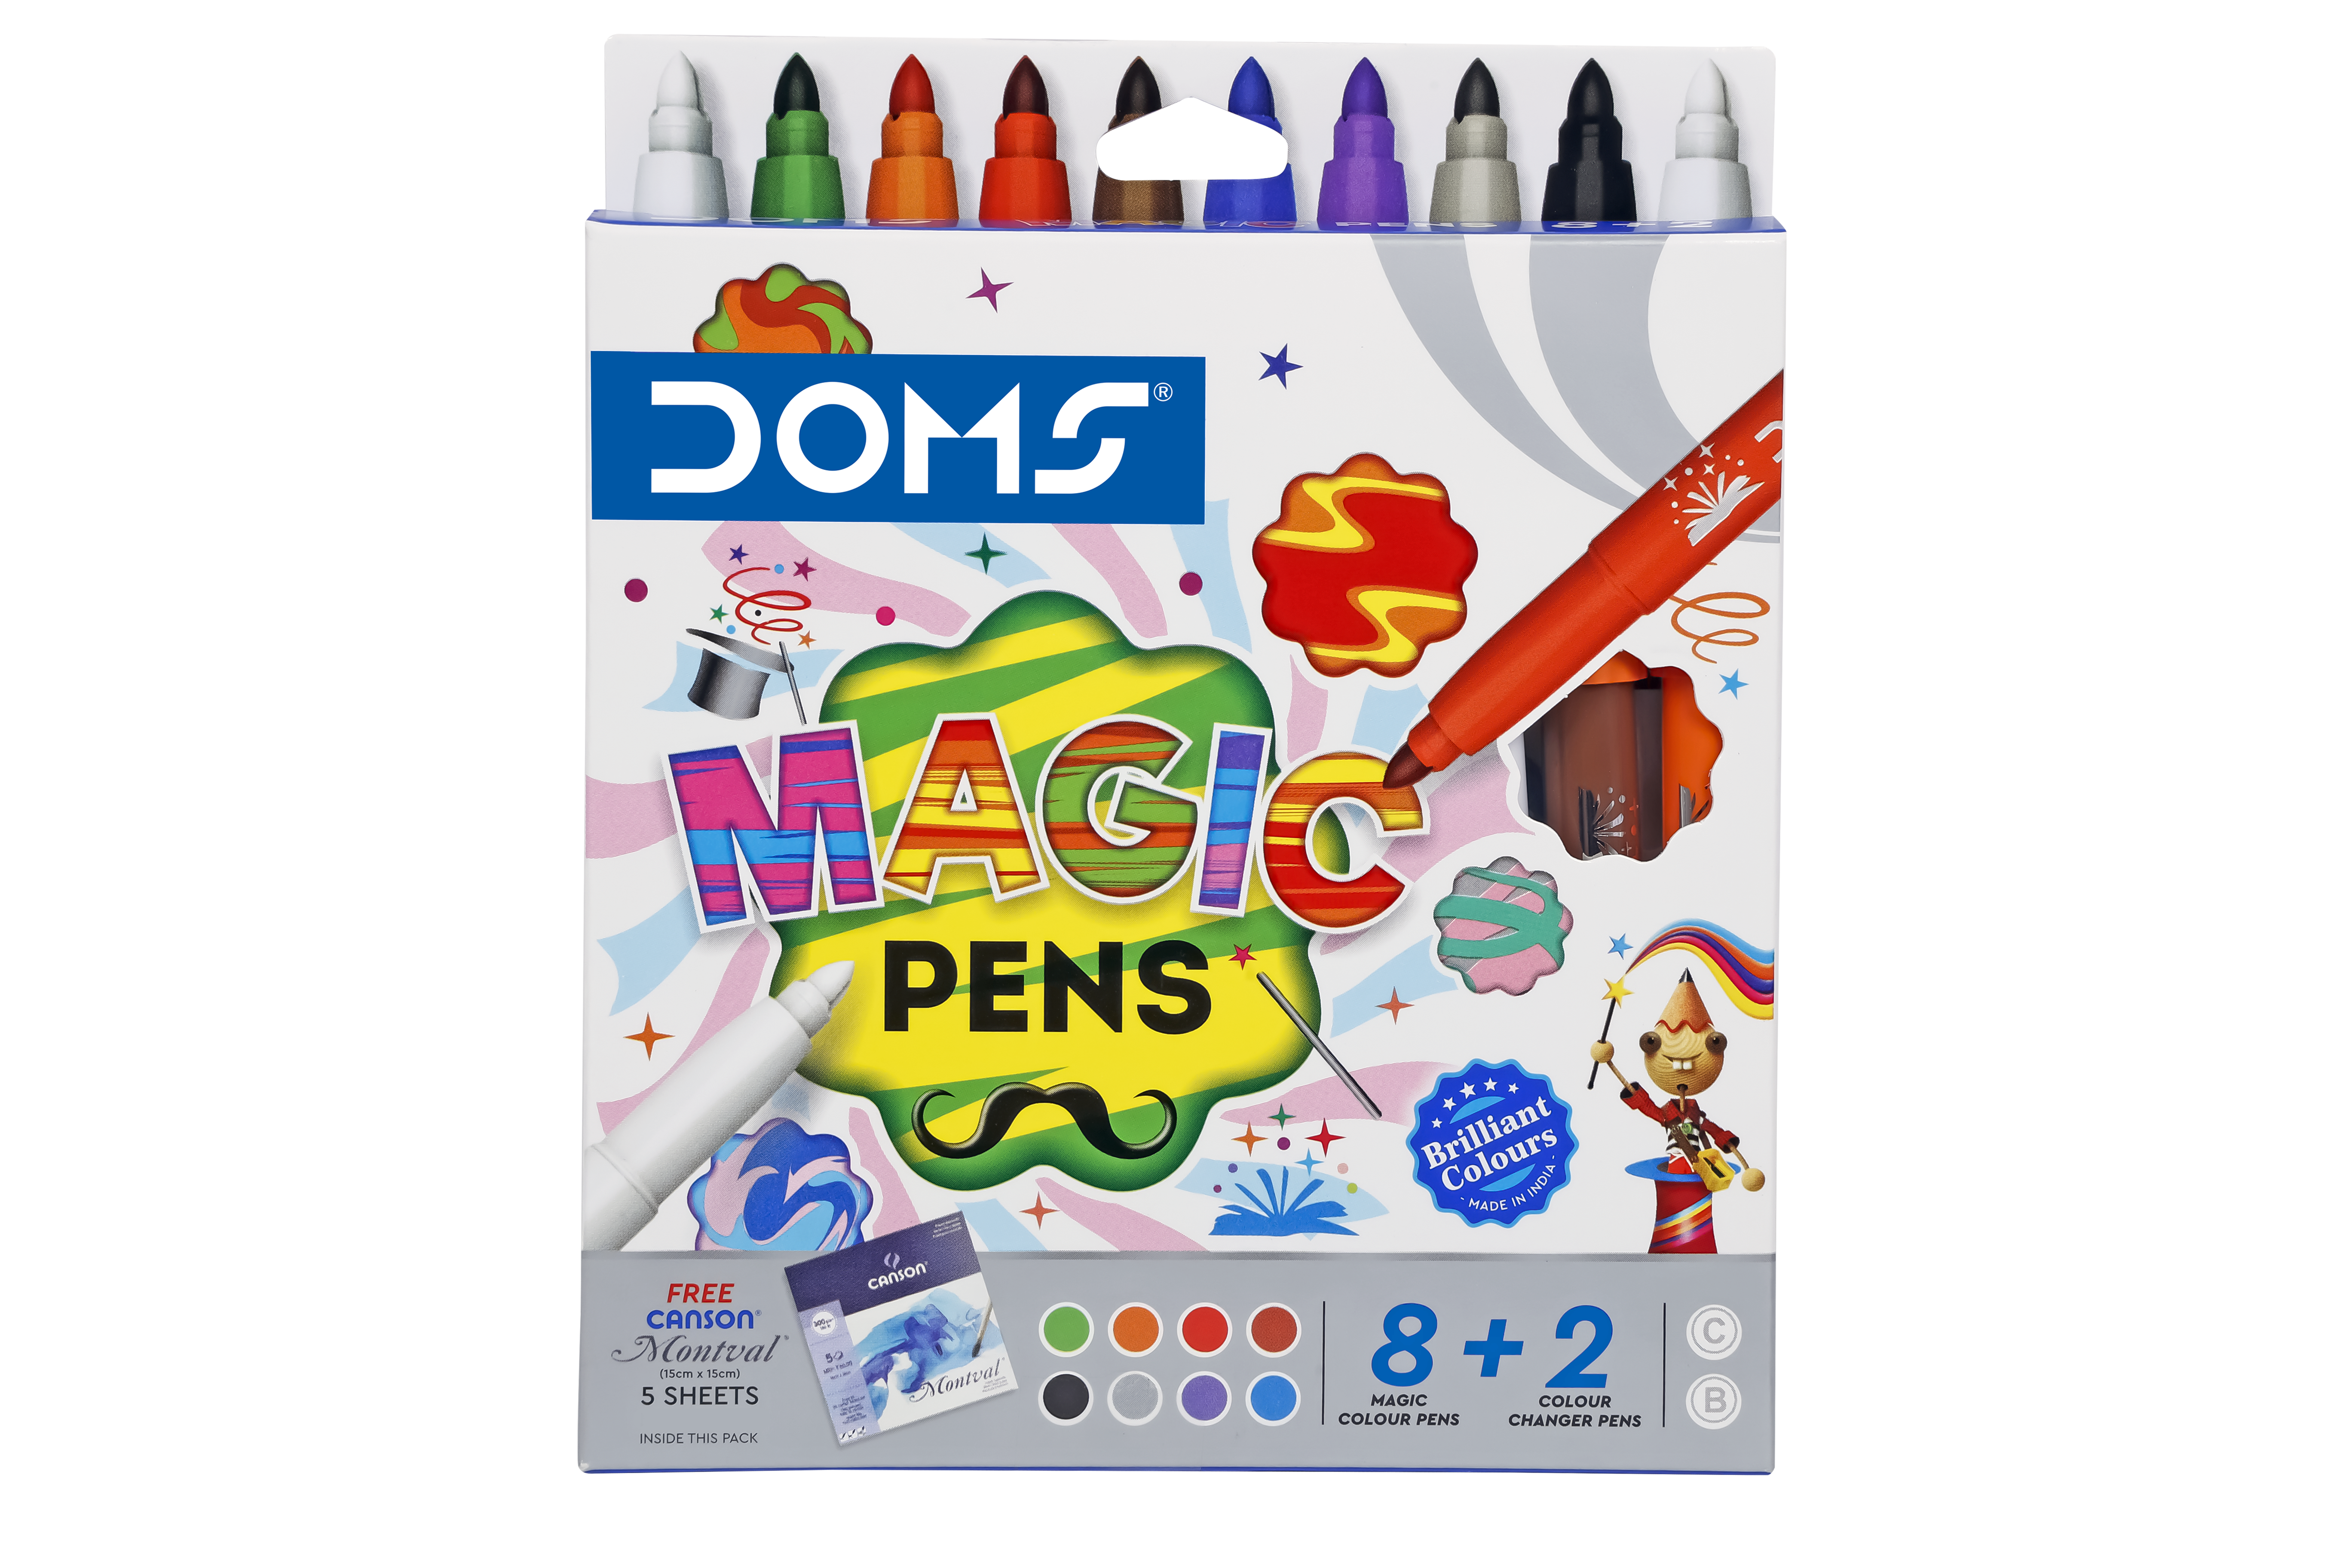 Doms Magic Pens Unboxing Video, Doms New Magic Pens Unboxing And Review, How To Use Doms Magic Pens To Your Art